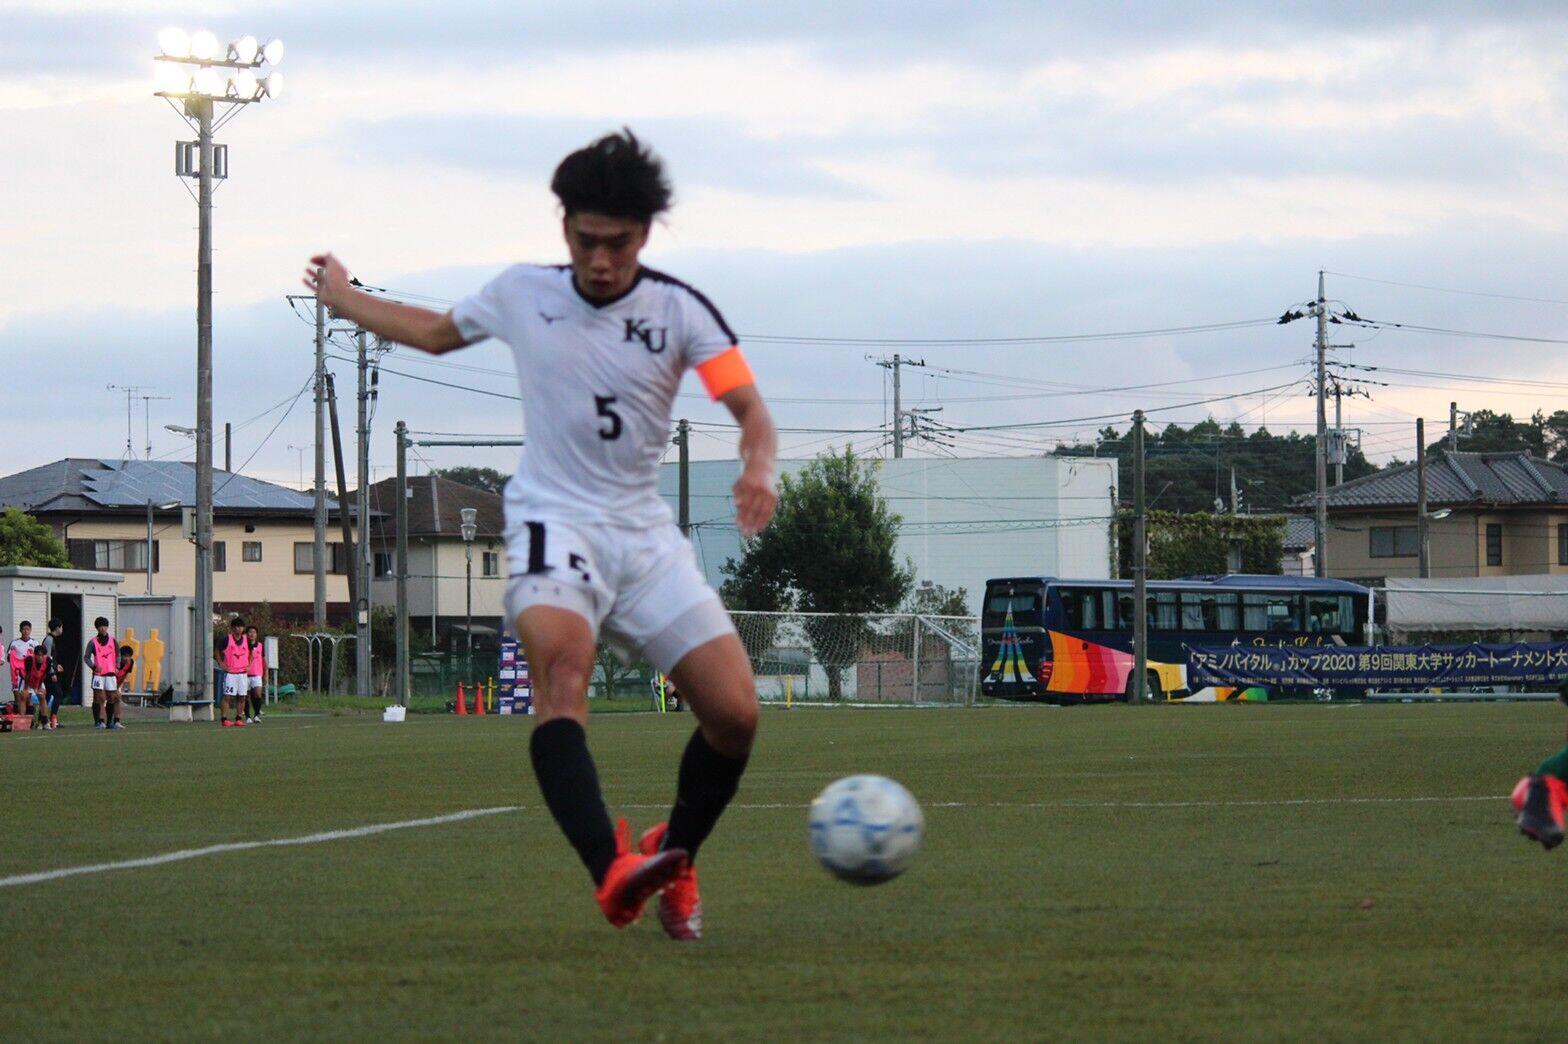 https://football.ku-sports.jp/blog/photoreport/images/20200928223530.jpg